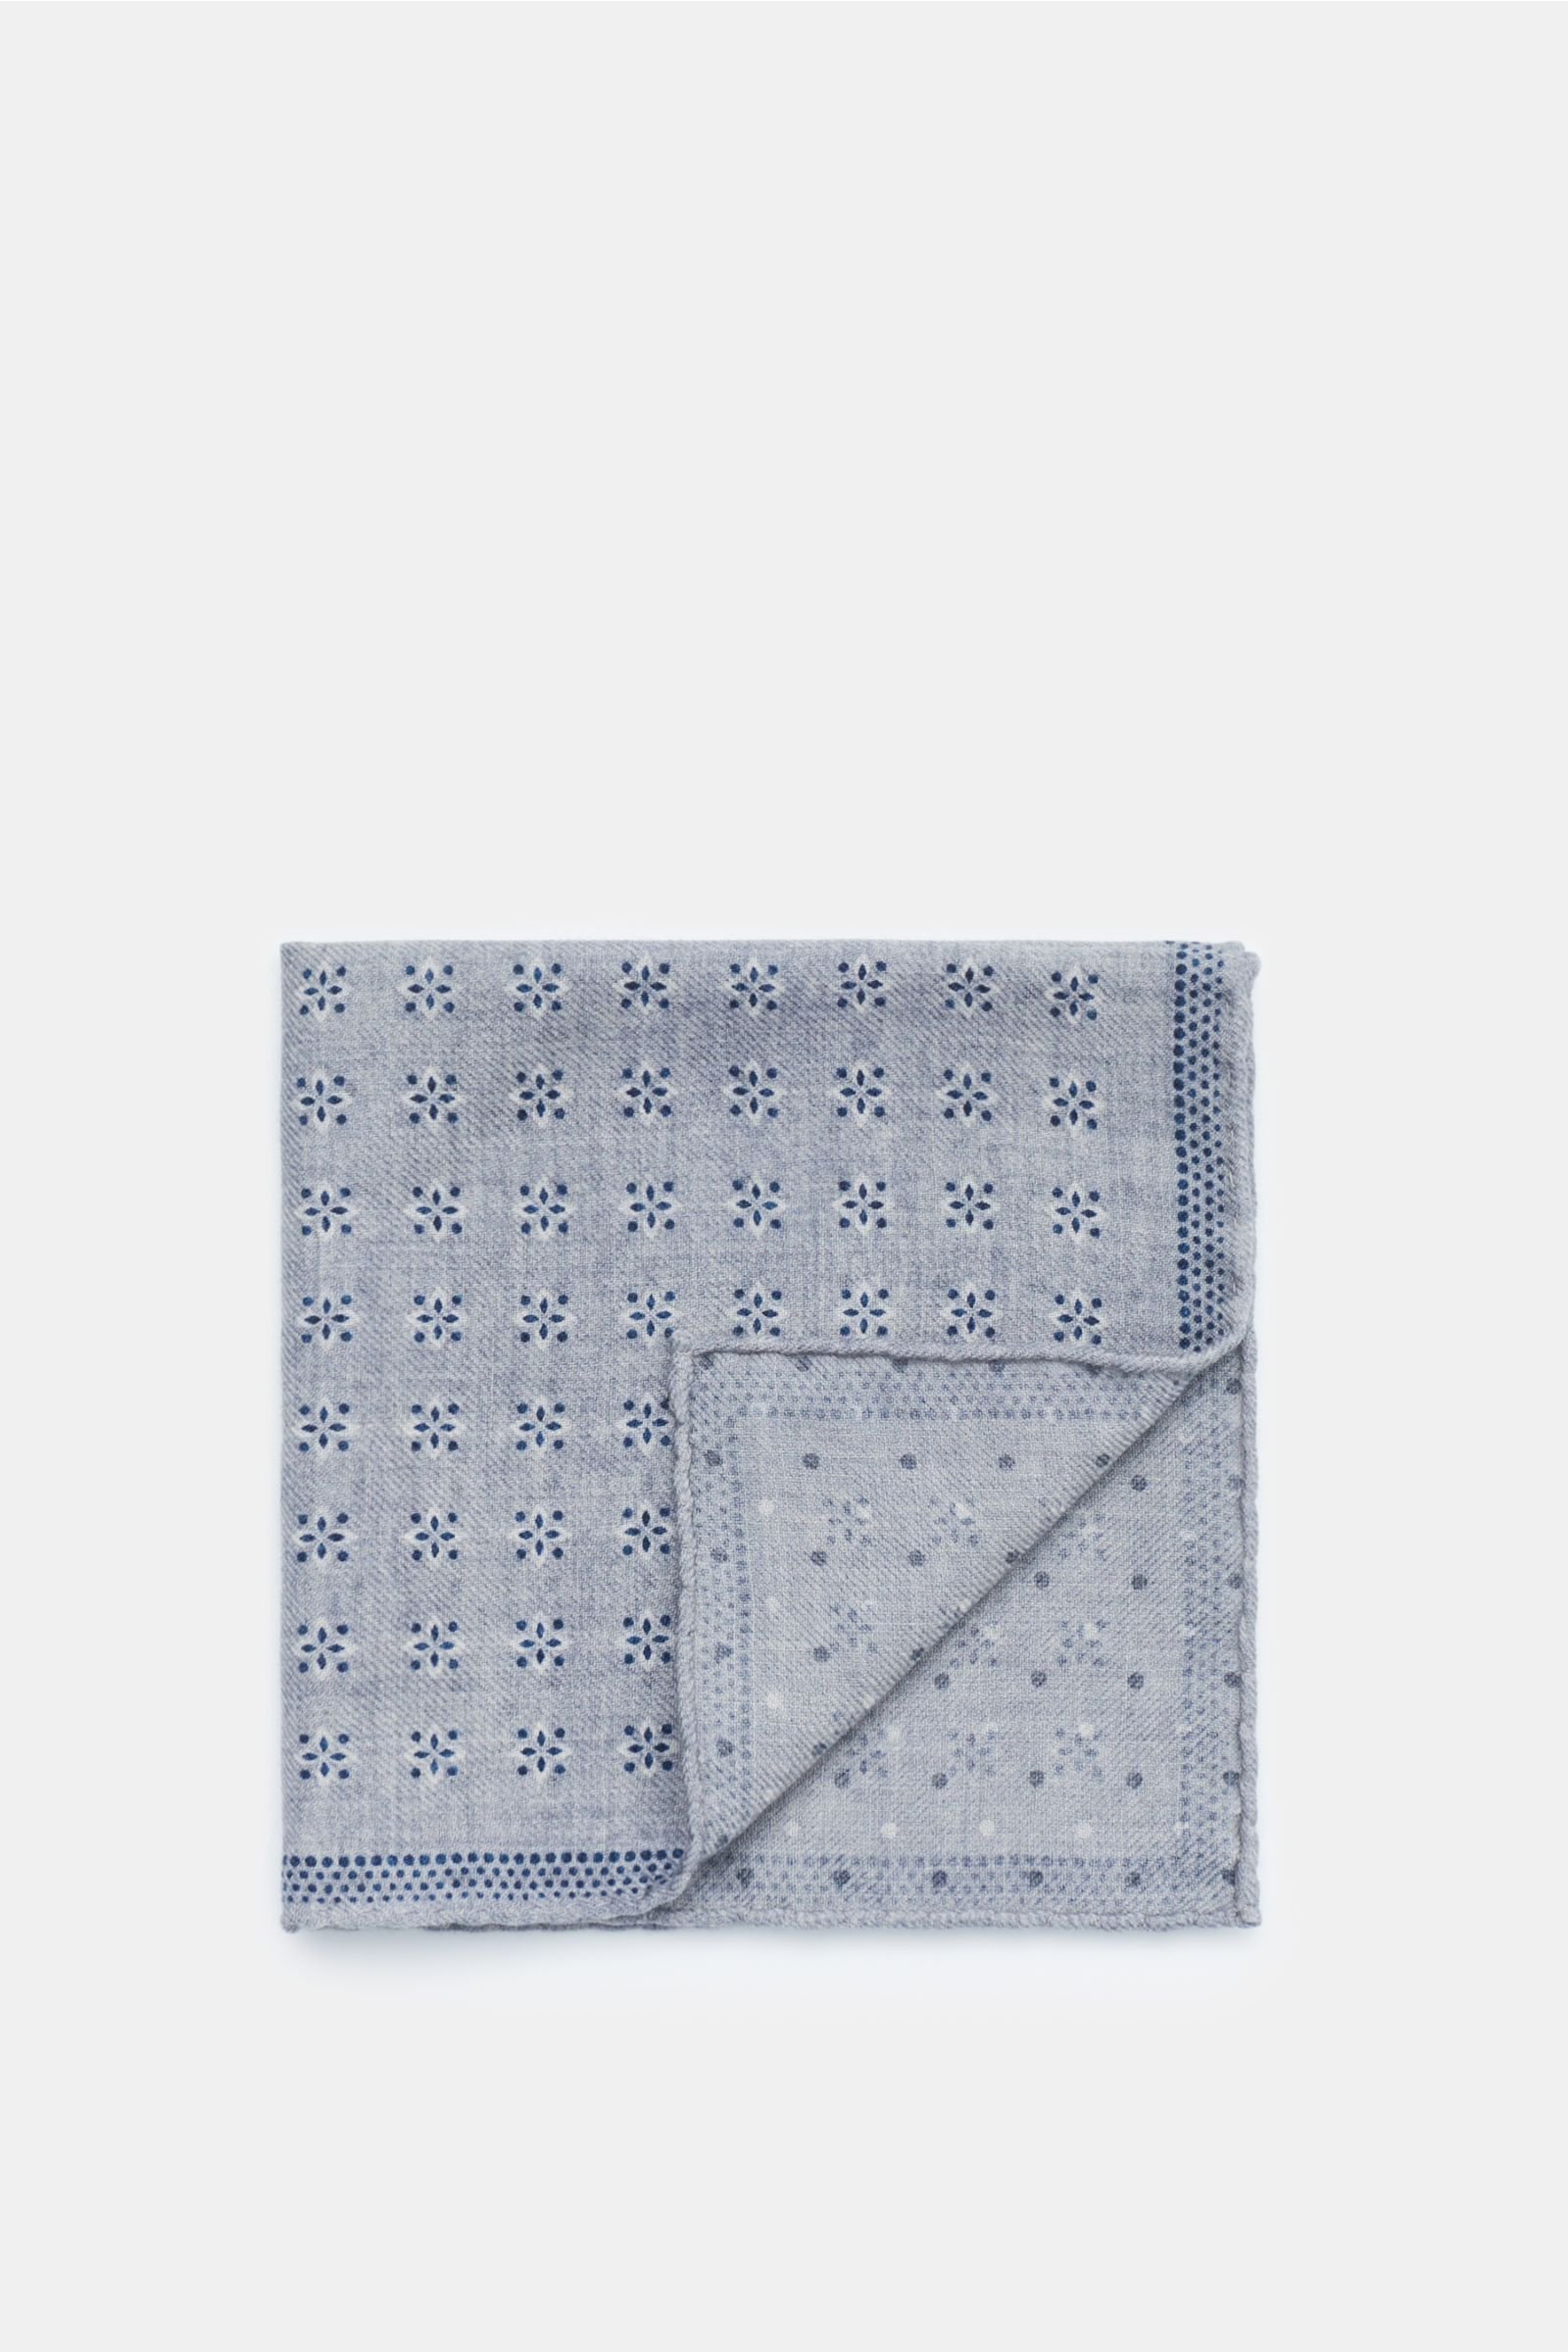 Pocket square grey/navy patterned